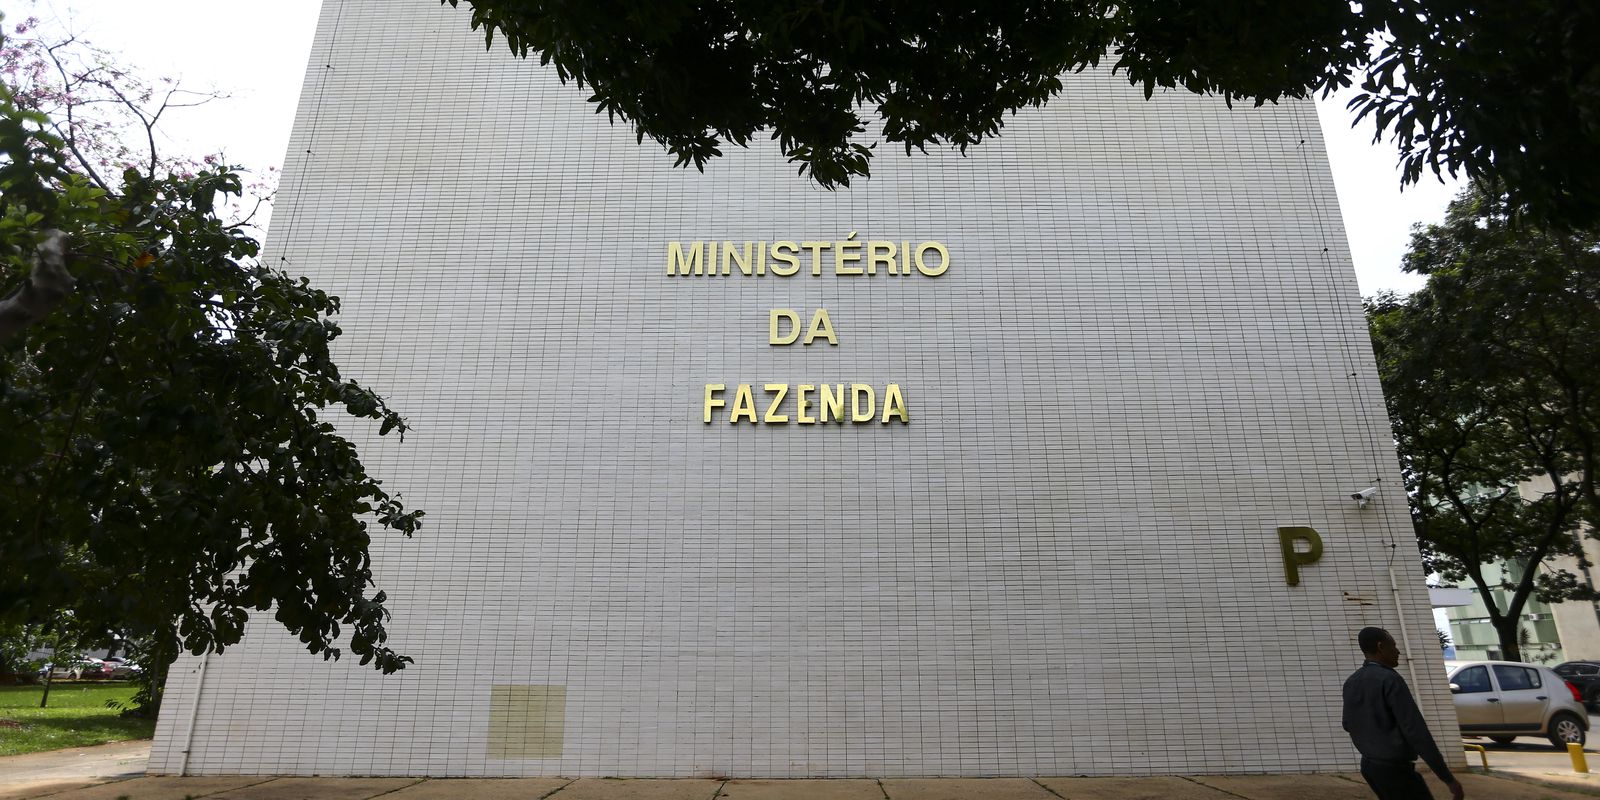 Fachada – ministério da fazenda